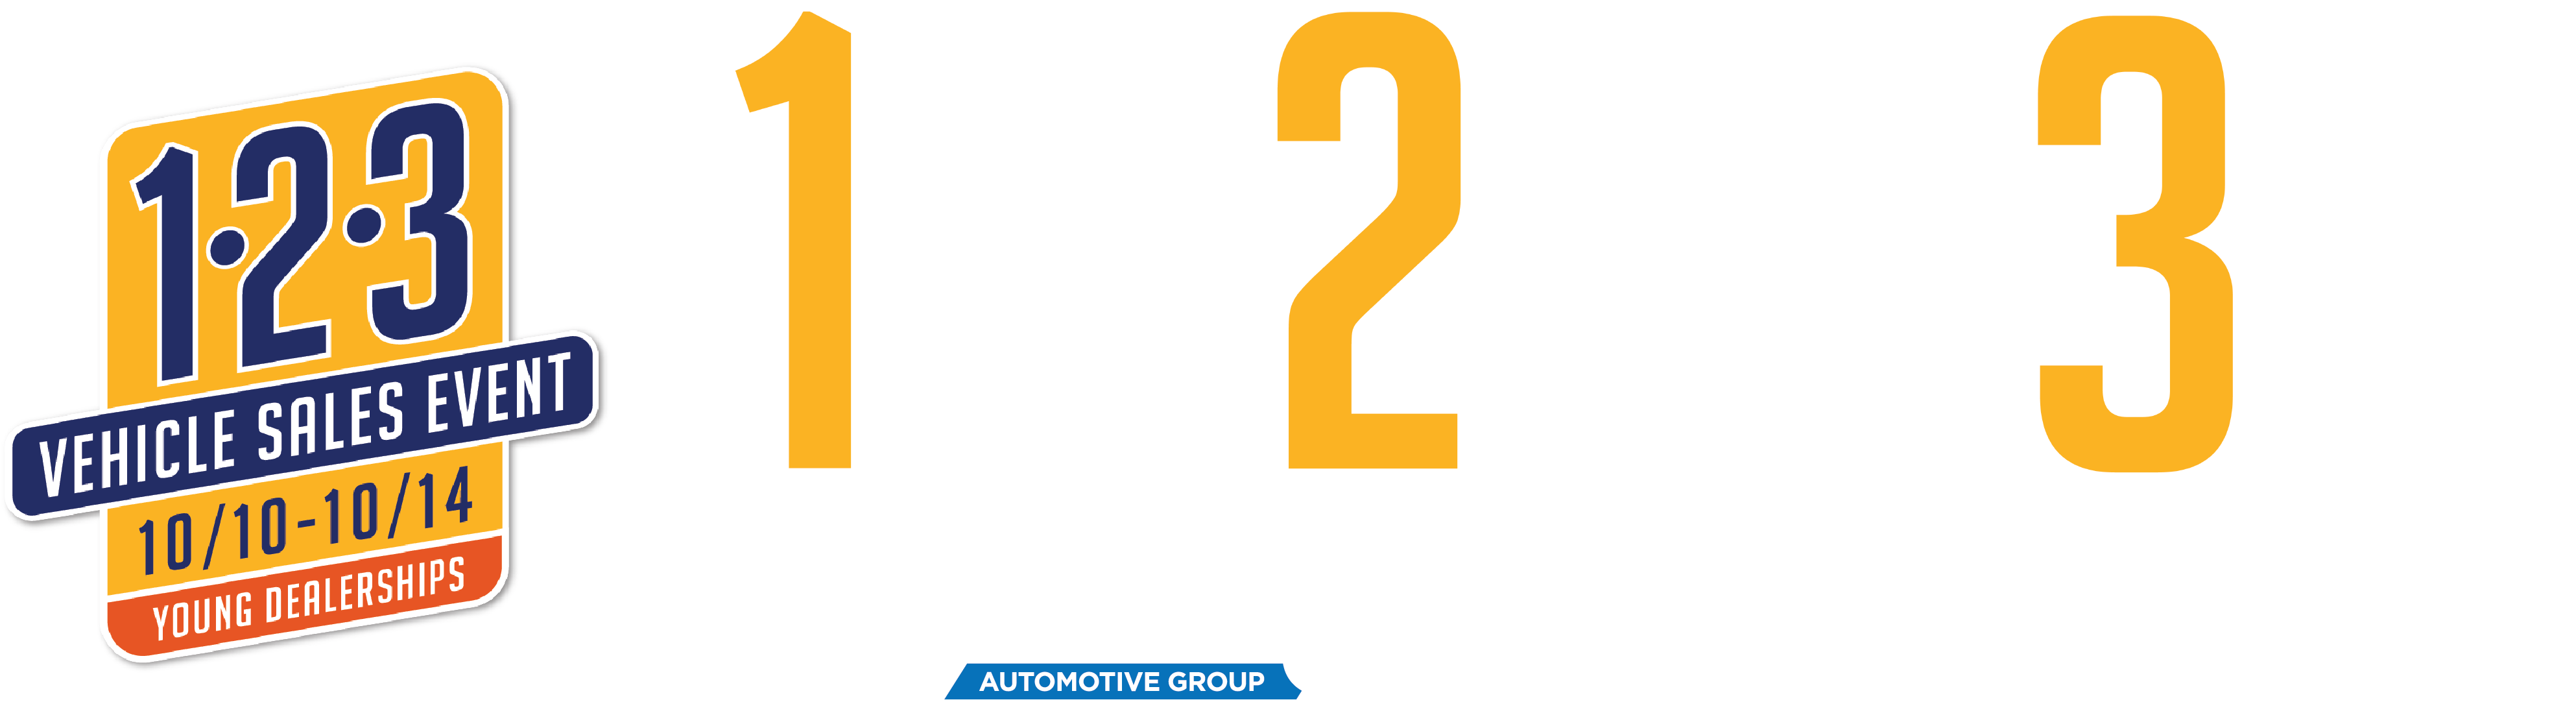 Vehicle Sales Event Promotion Banner PNG image